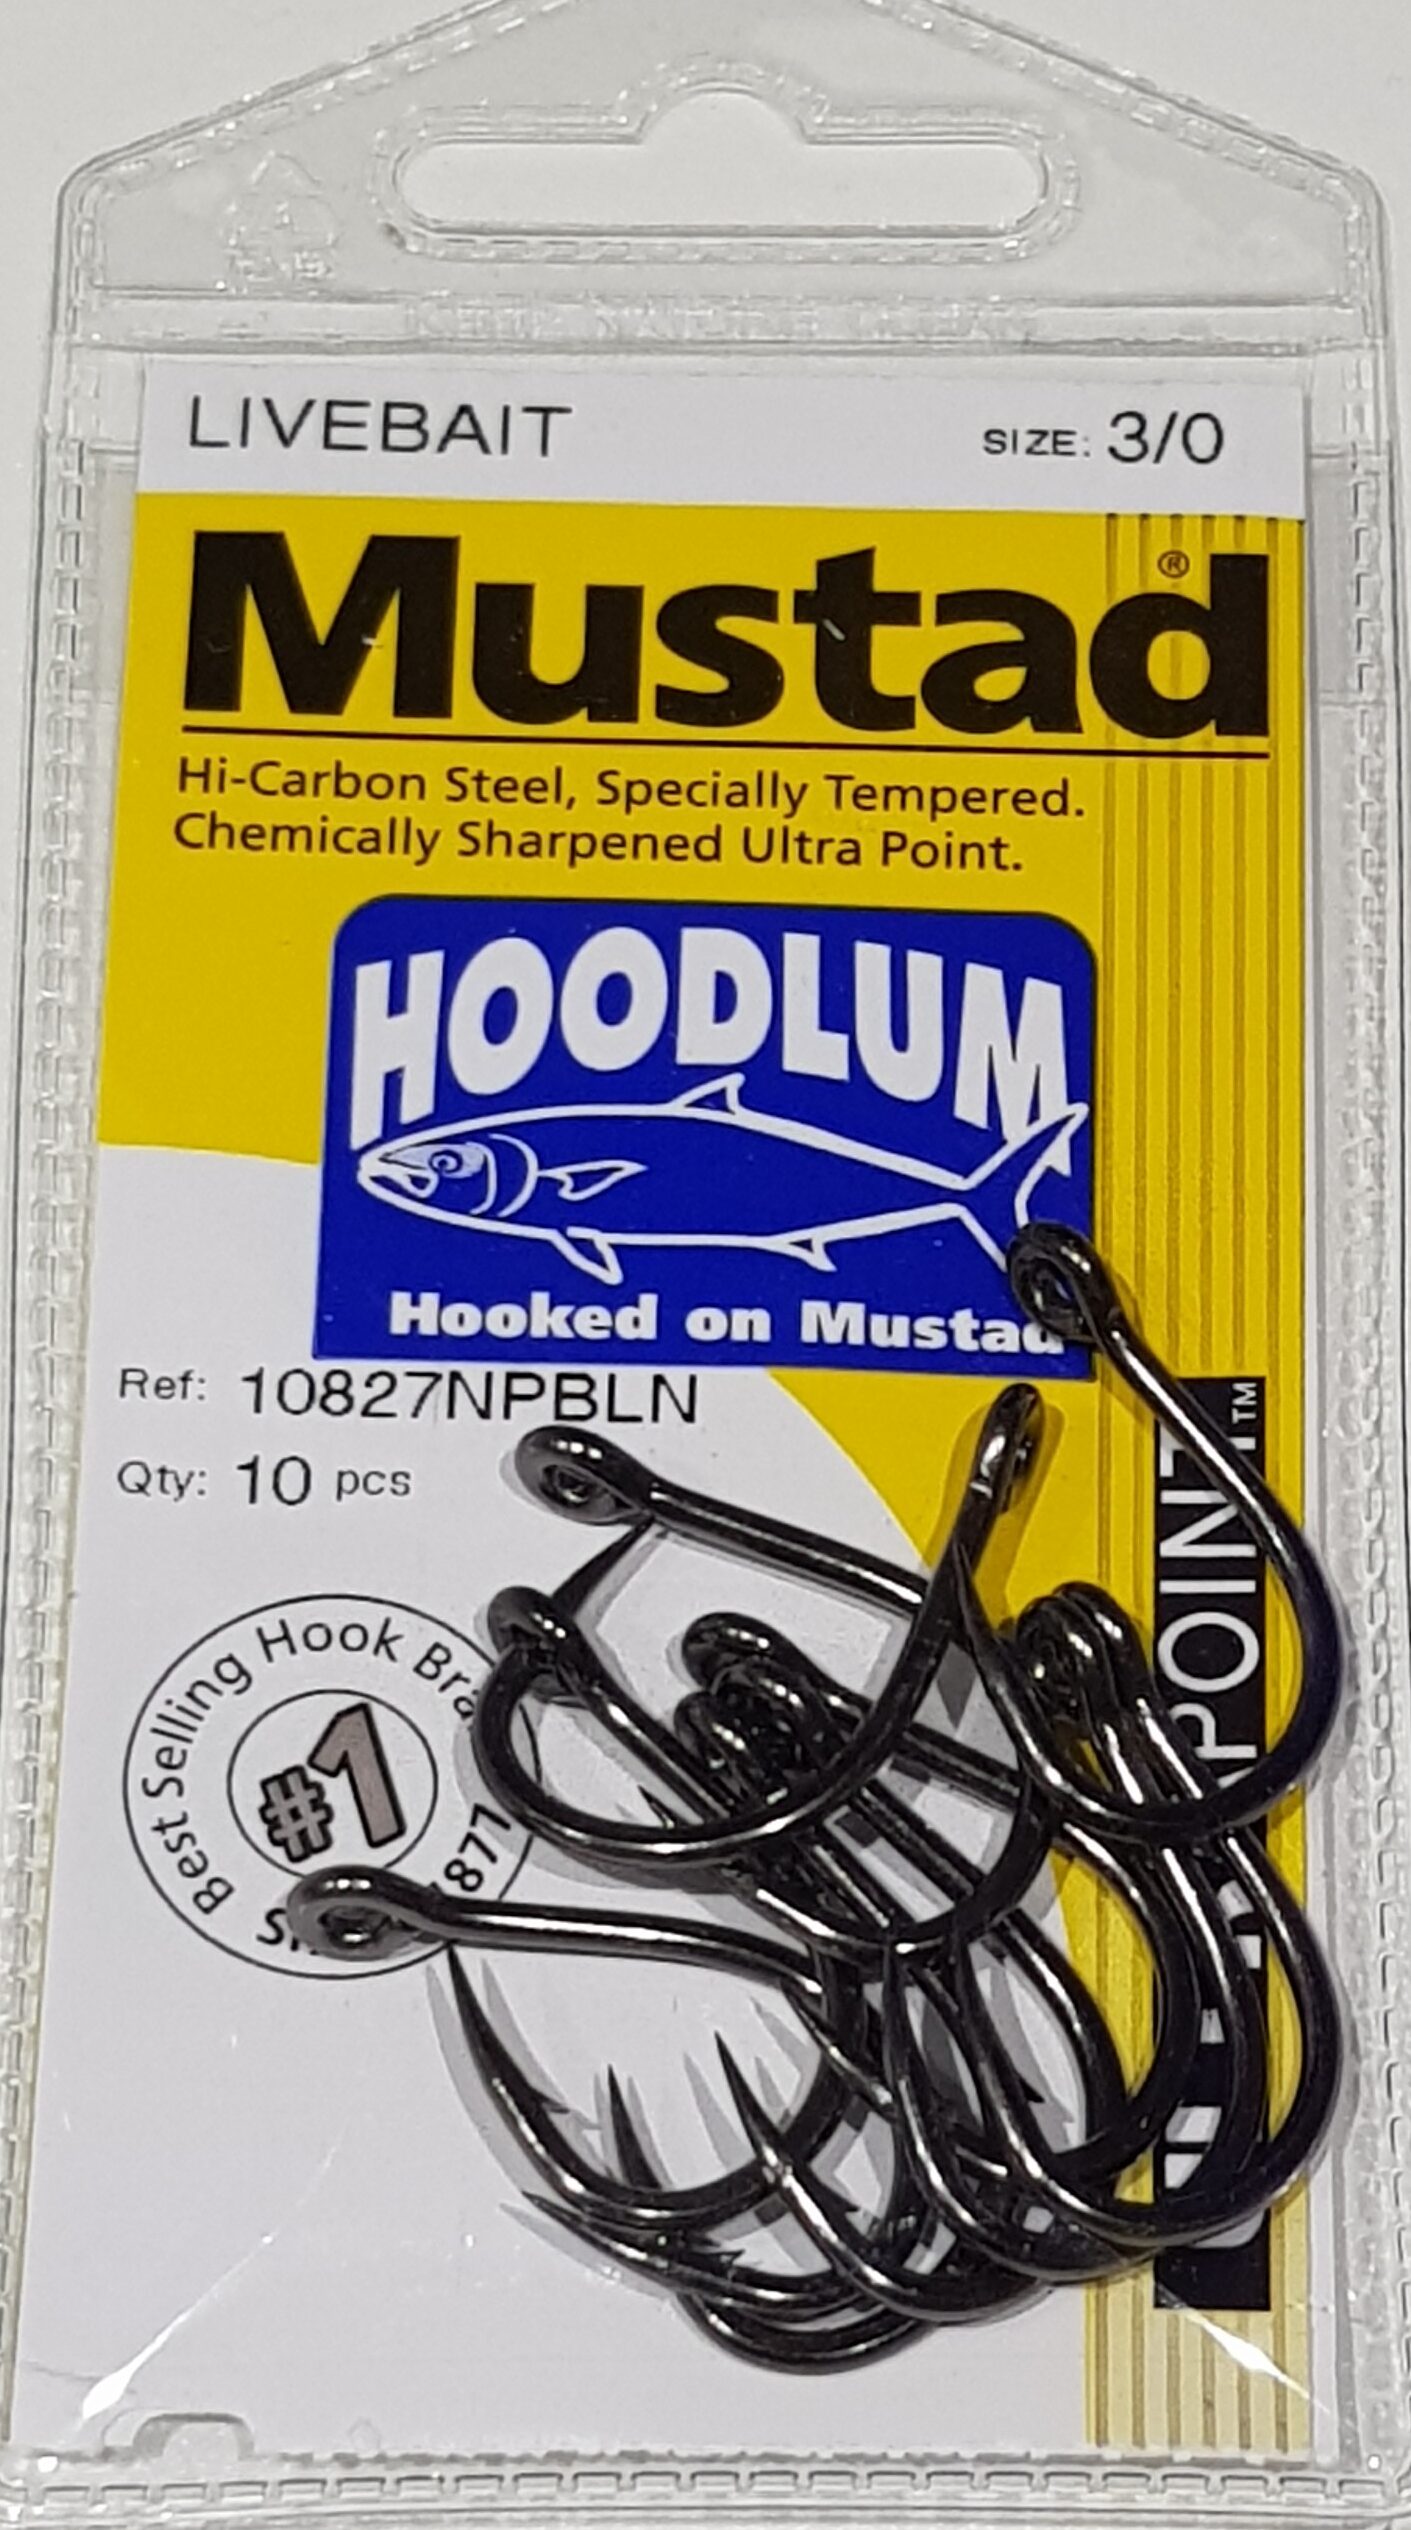 Mustad Hoodlum Live Bait Fishing Hooks 3/0 – Online Fishen Supplies